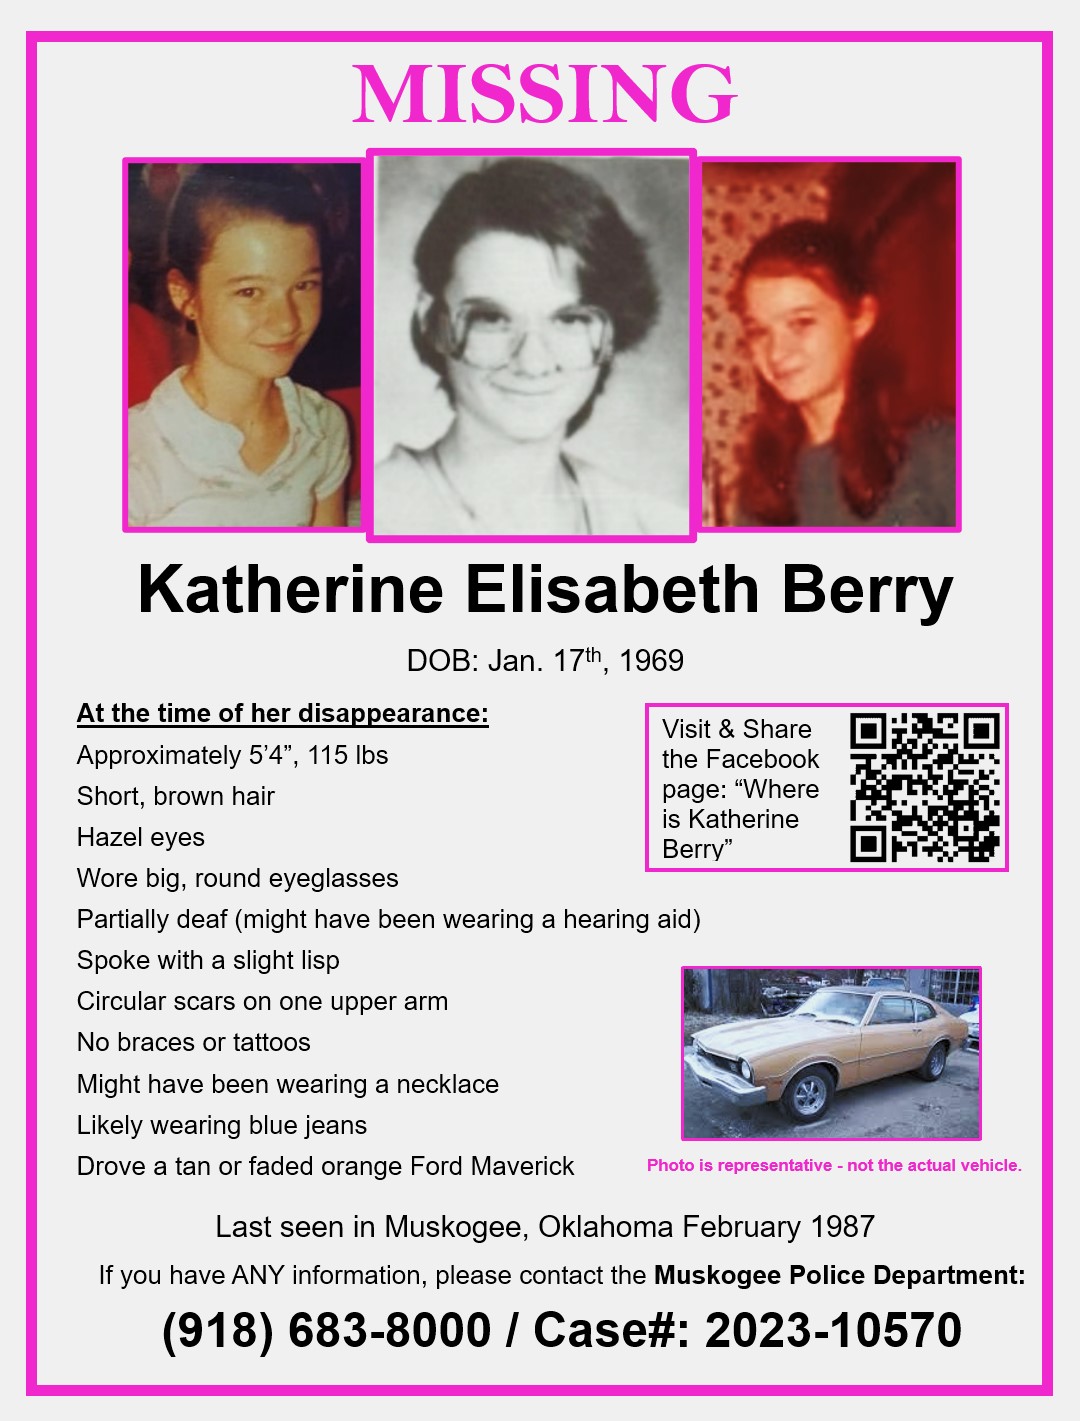 MISSING: Katherine Berry (Muskogee, Oklahoma)